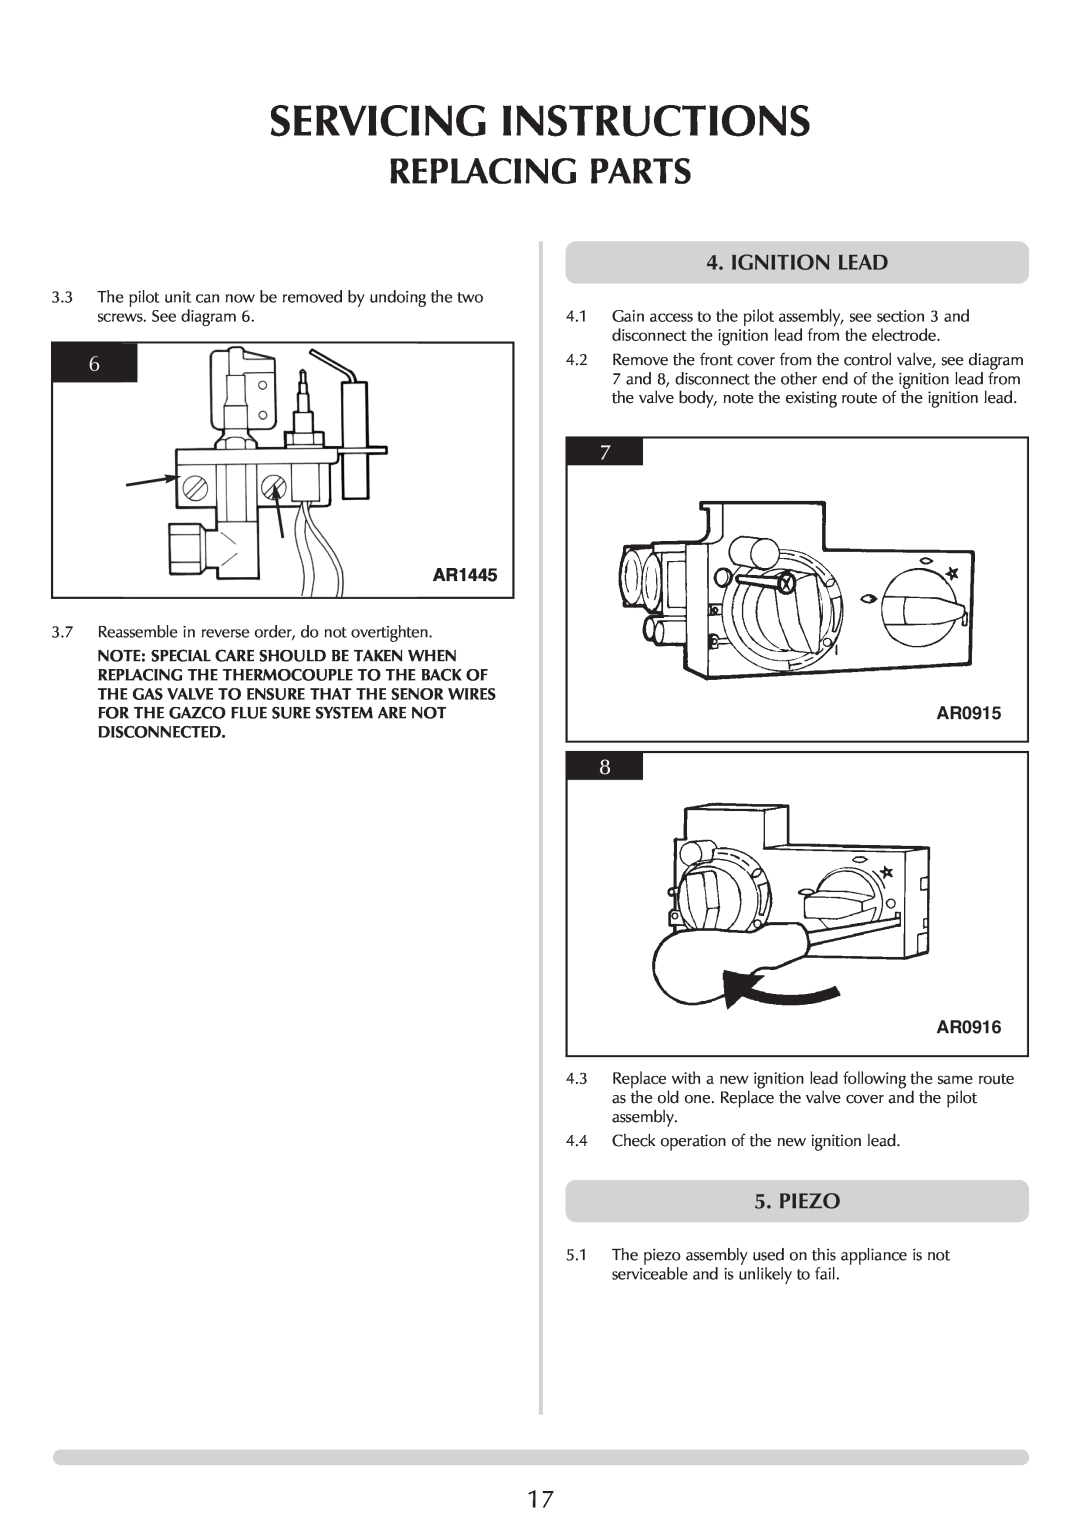 Stovax manual Servicing Instructions, Replacing Parts, AR1445, AR0915, AR0916 